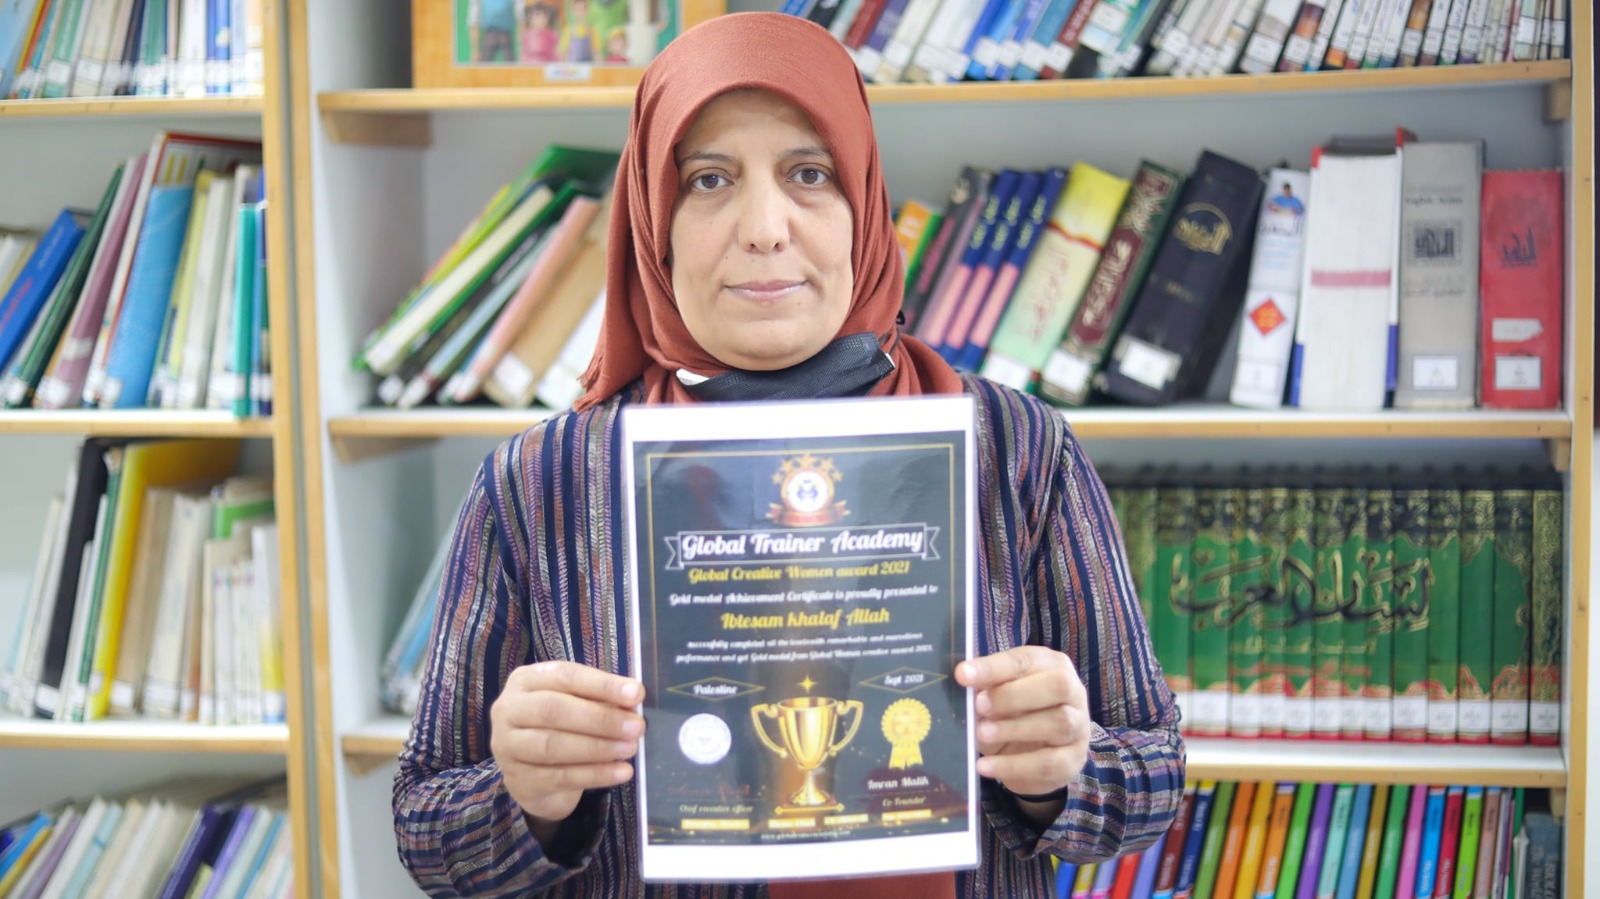 Two teachers  in UNRWA schools-Gaza win the International Creative Women Award